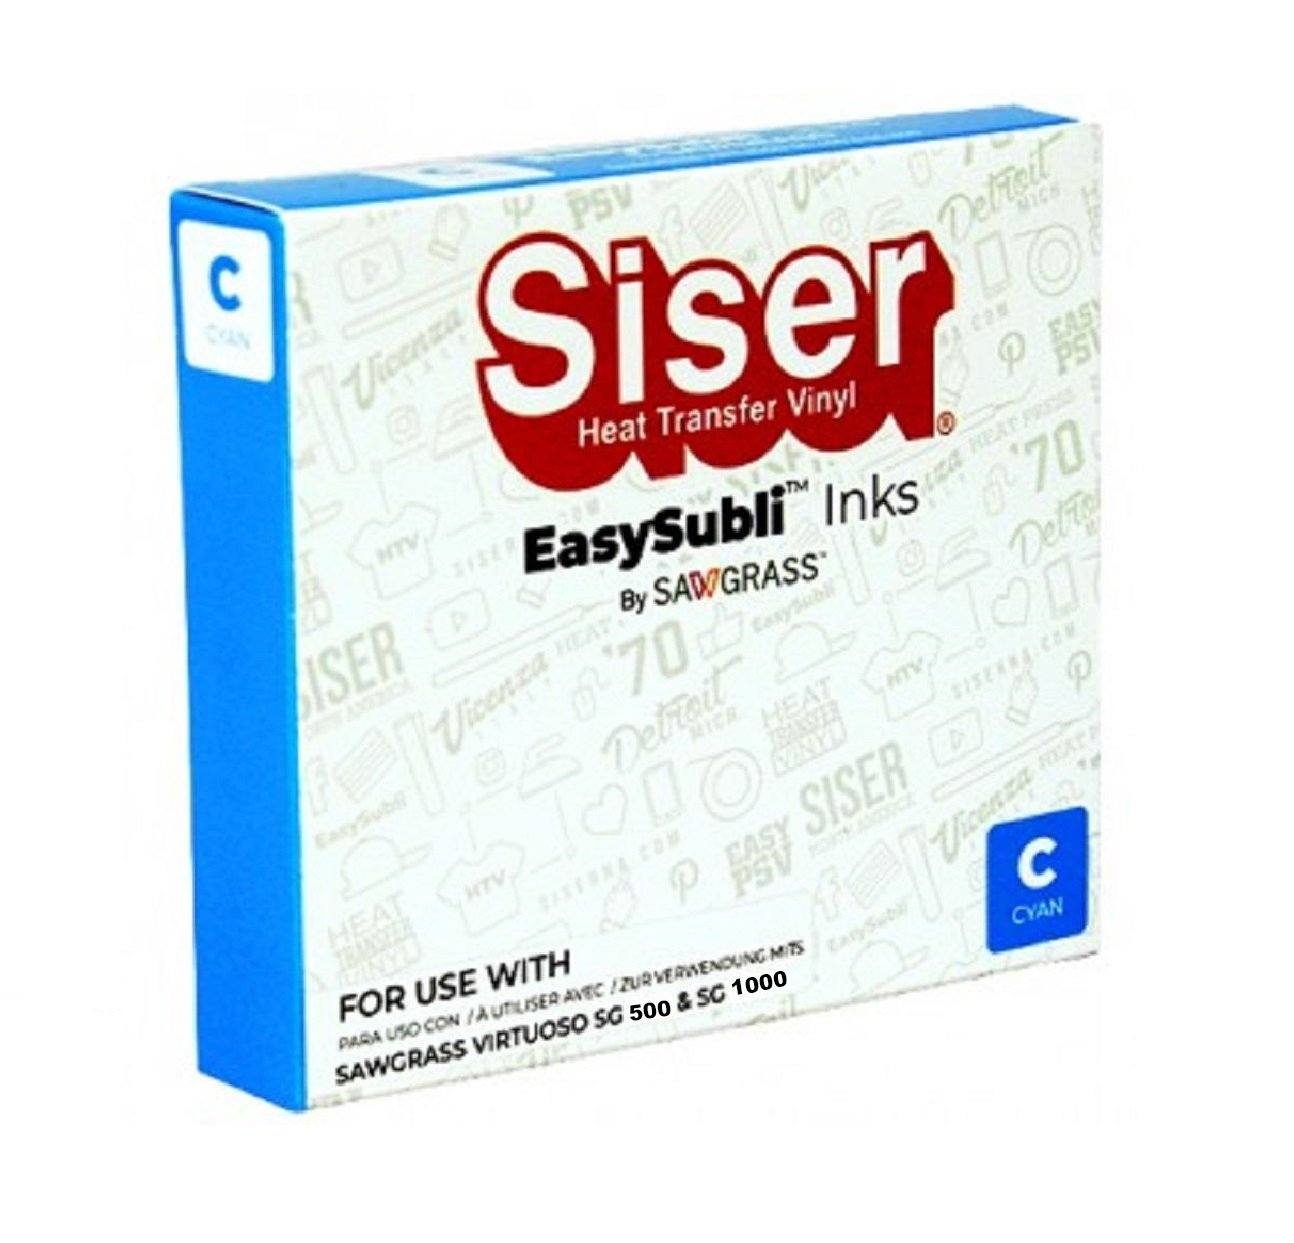 EasySubli™ Inks SG500/SG1000  Heat Transfer Vinyl 4u – HEAT TRANSFER VINYL  4U